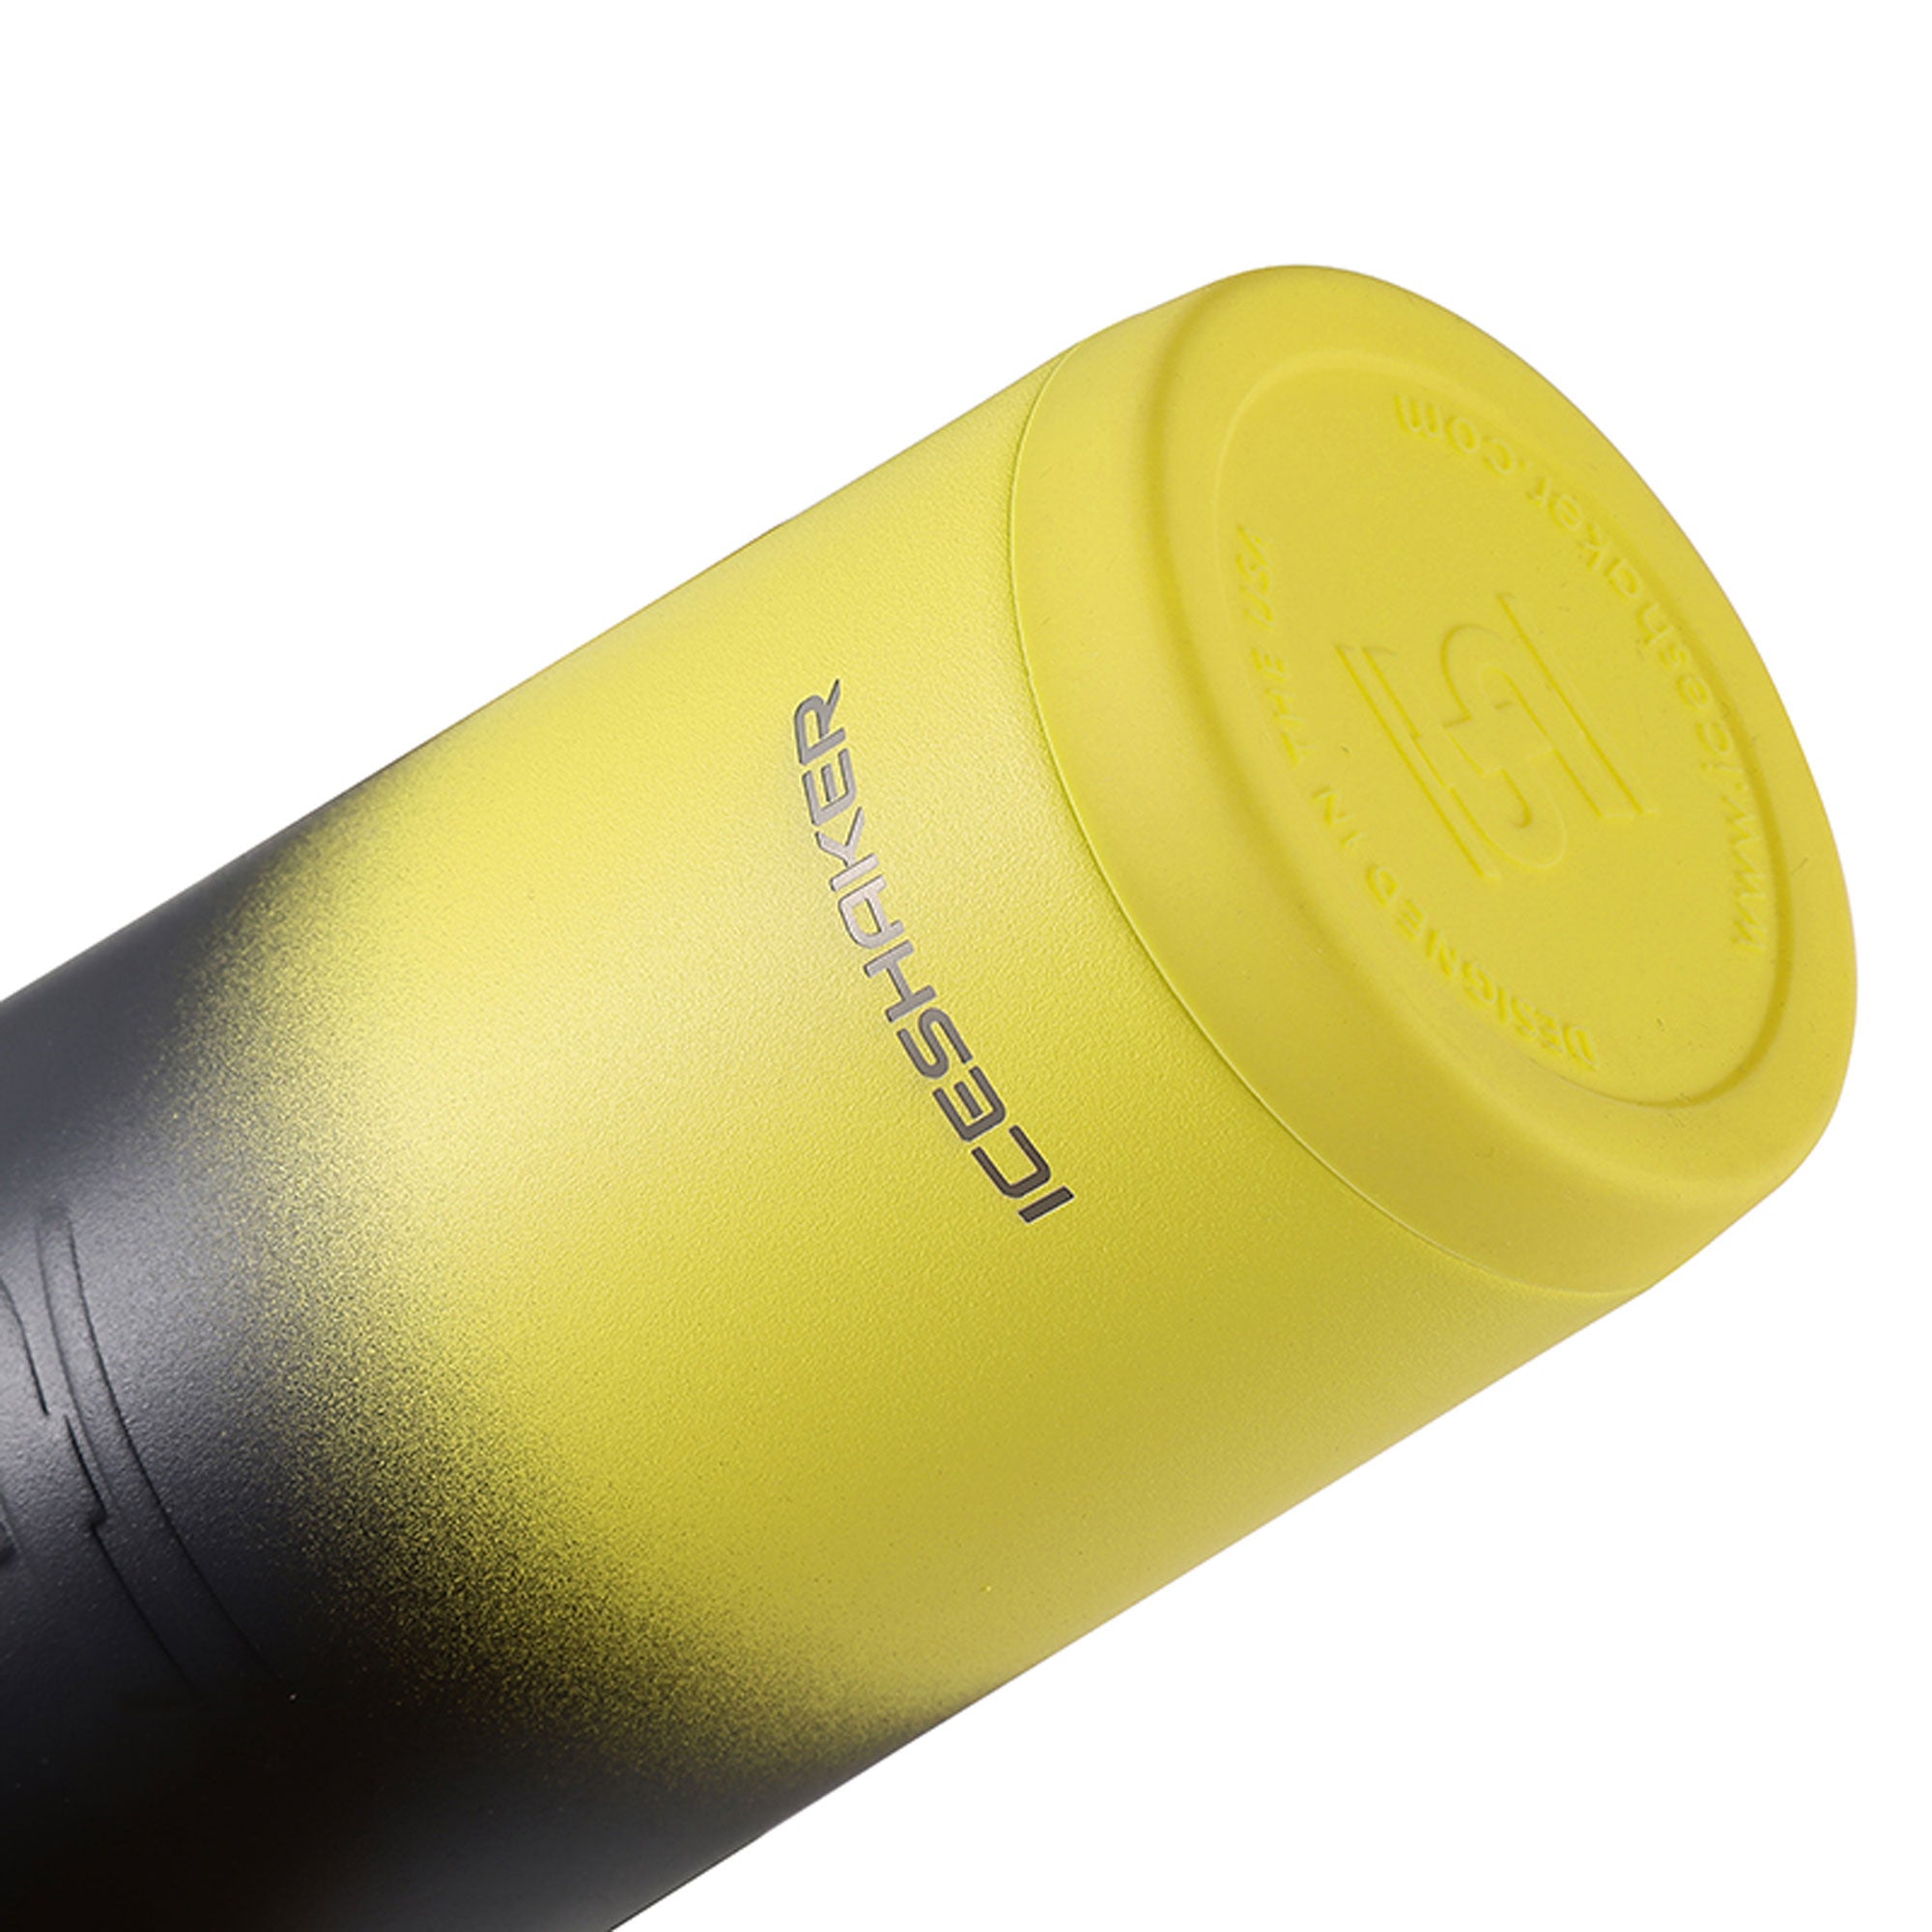 Yellow & Black Insulated Shaker Bottle